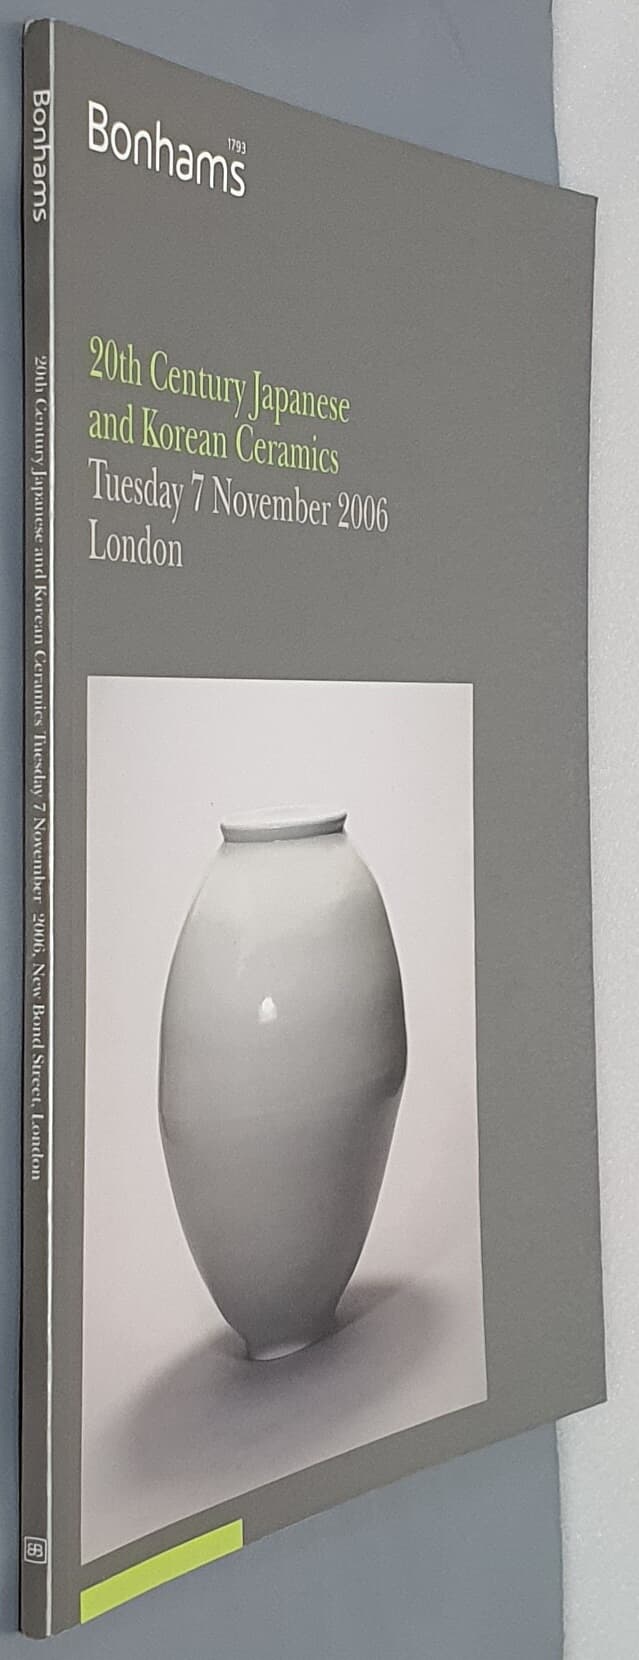 Bonhams 1793 - 20th Century Japanese and Korean Ceramics (Tuesday 7 November 2006 London)